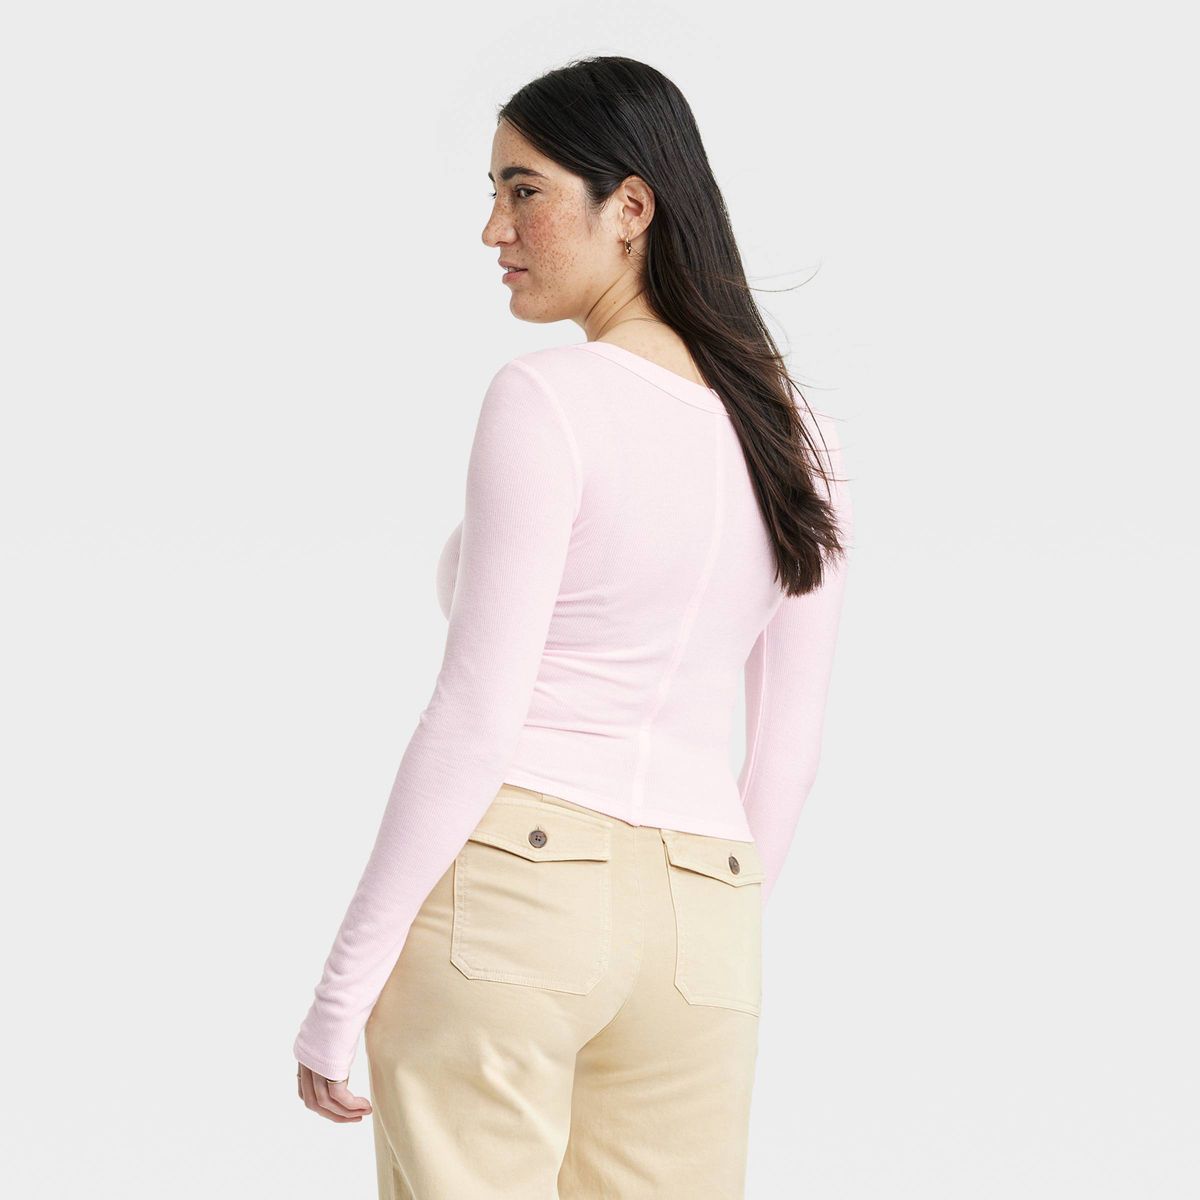 Women's Long Sleeve Ribbed Scoop Neck T-Shirt - Universal Thread™ | Target